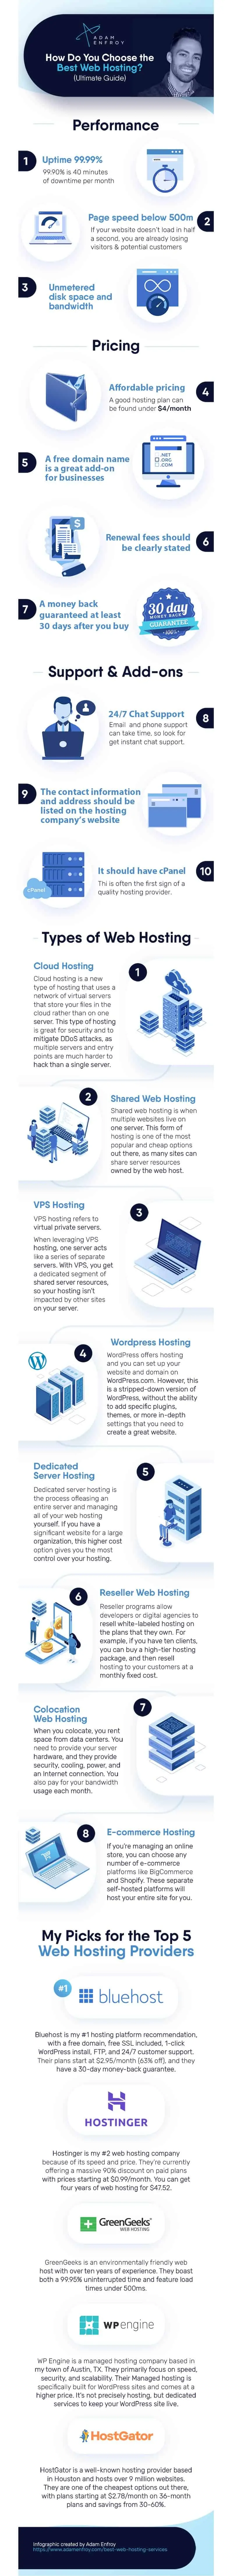 Web Hosting Infographic